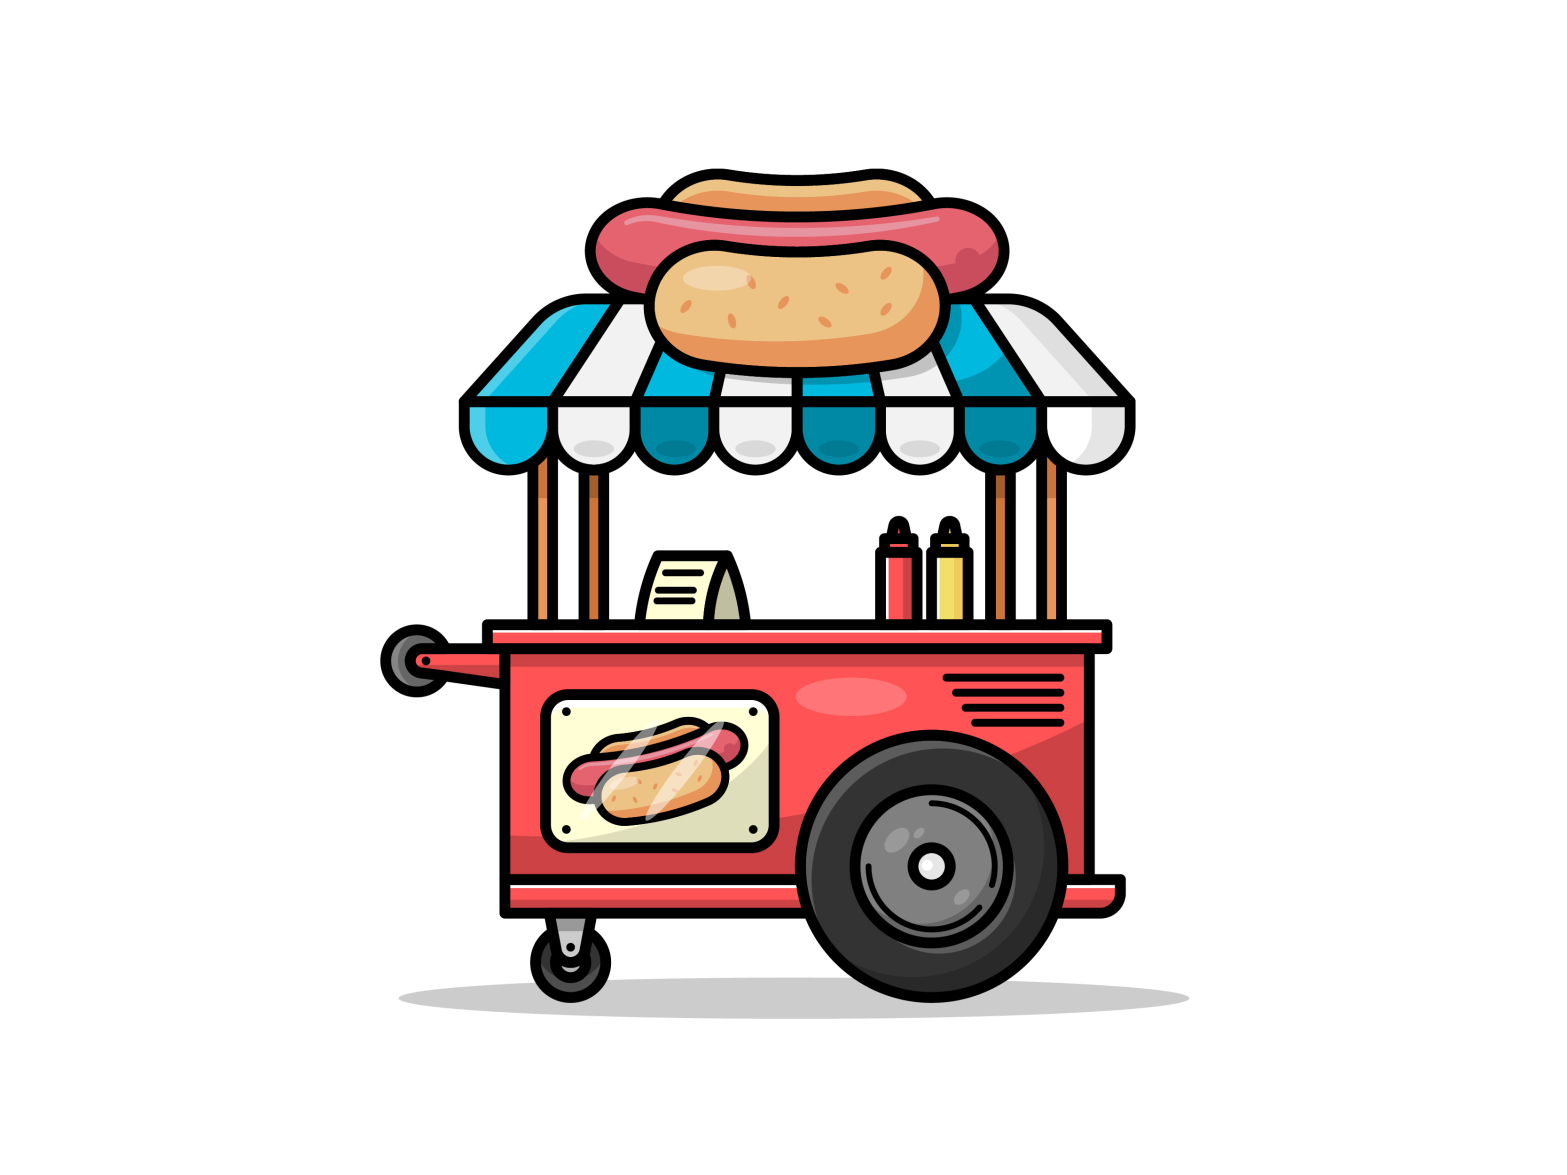 Hot Dog Stand - Flat Design Illustration by Dom Designs on Dribbble